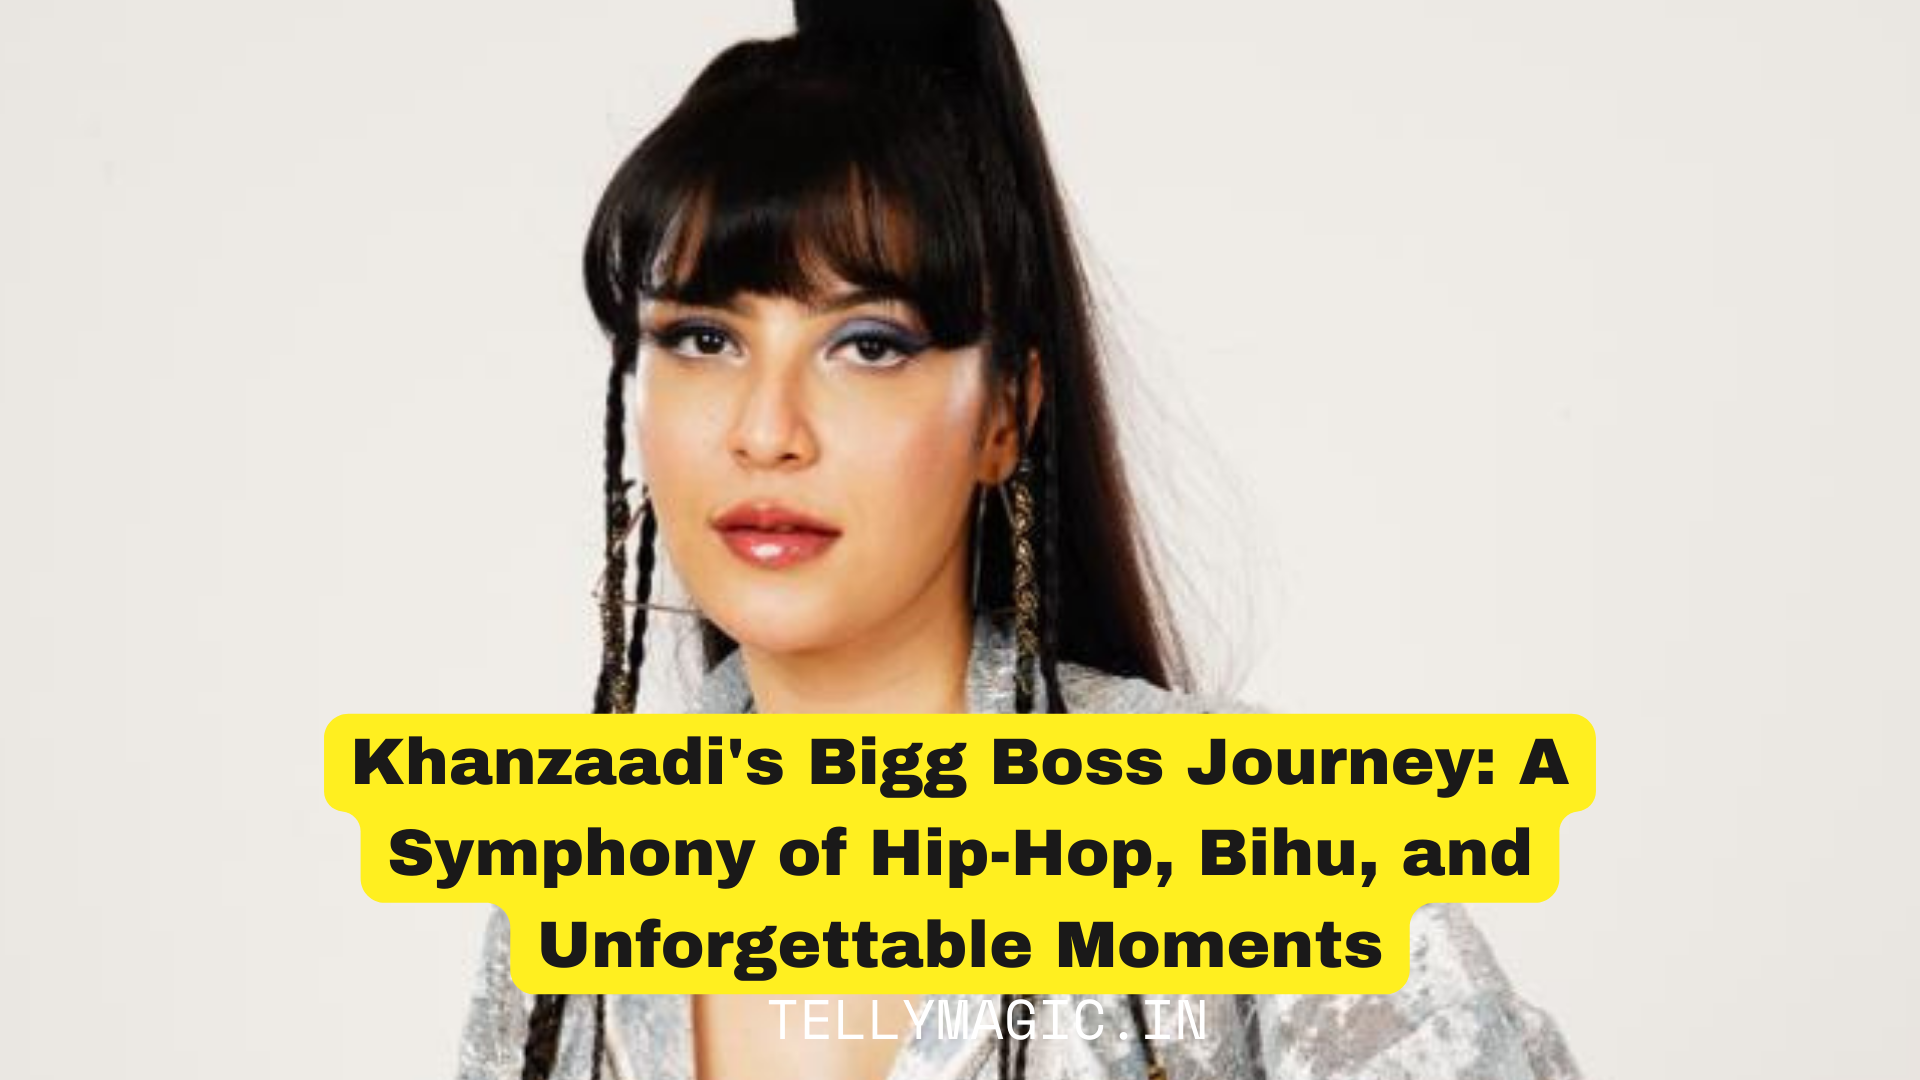 Khanzaadi Bigg Boss Journey: A Symphony of Hip-Hop, Bihu, and Unforgettable Moments